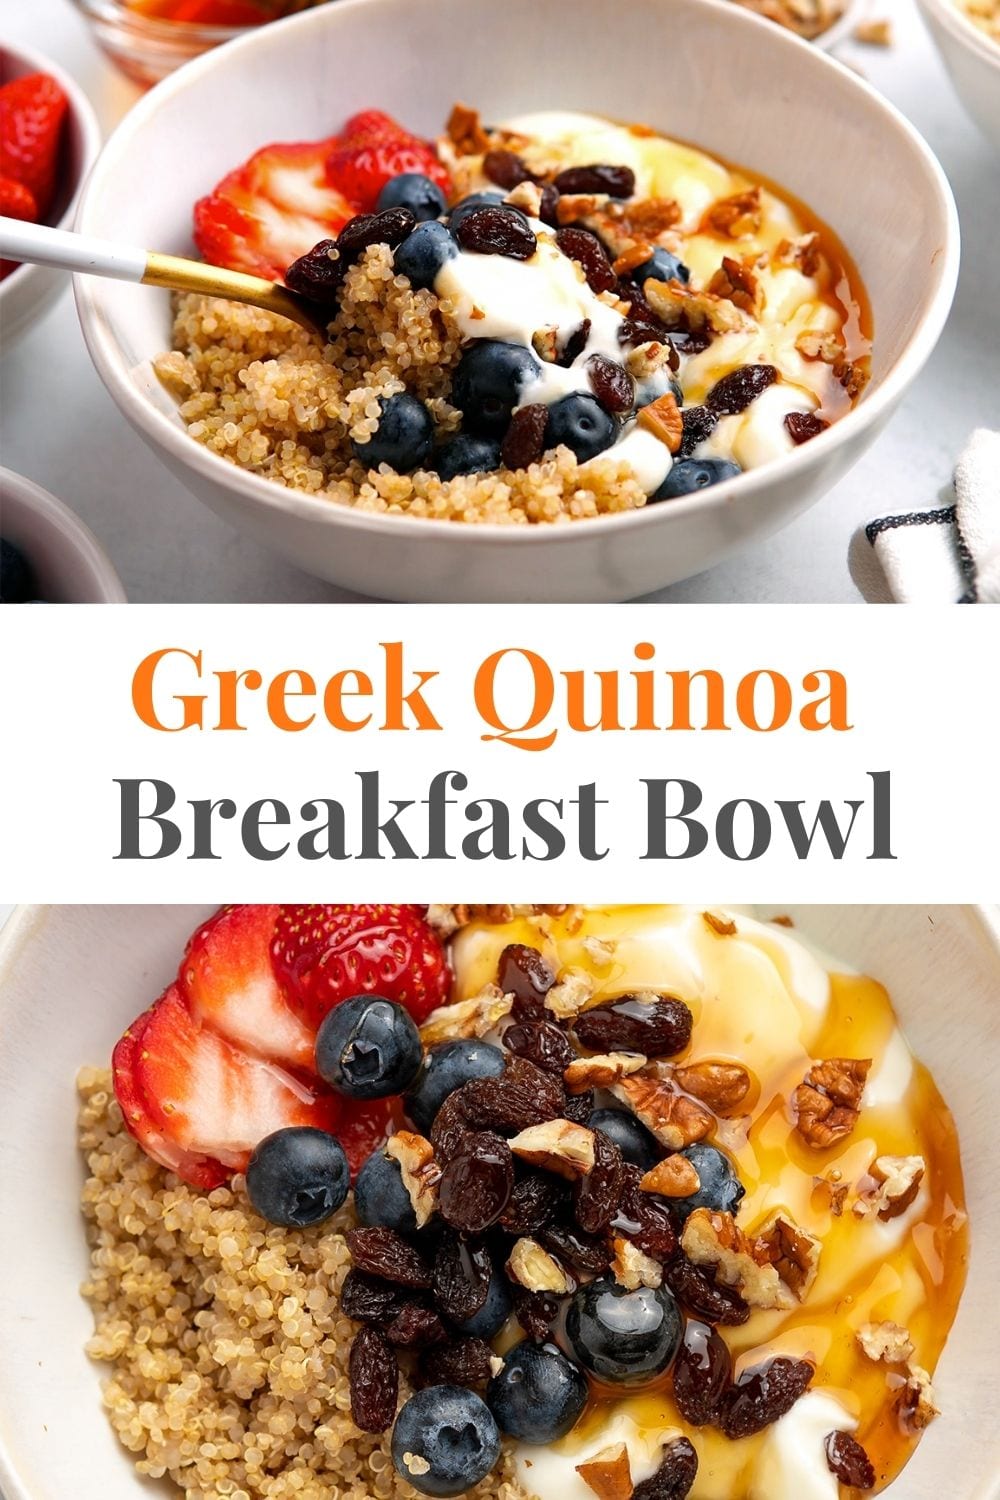 Greek-Inspired Quinoa Breakfast Bowl